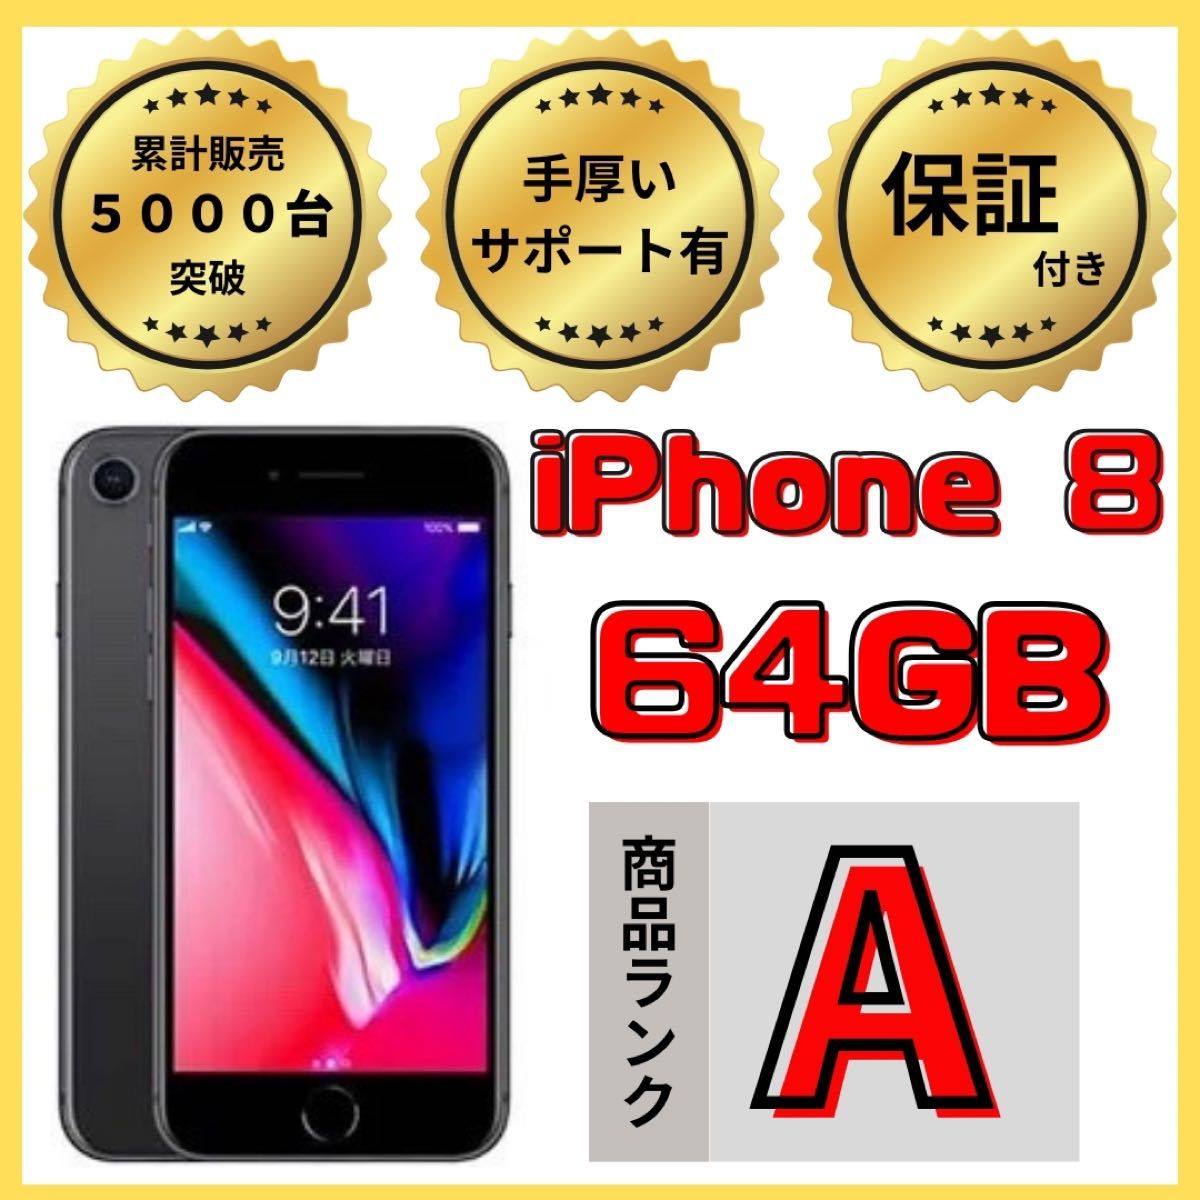 iPhone 8 64GB simフリー本体 603 【高額売筋】 - スマートフォン本体